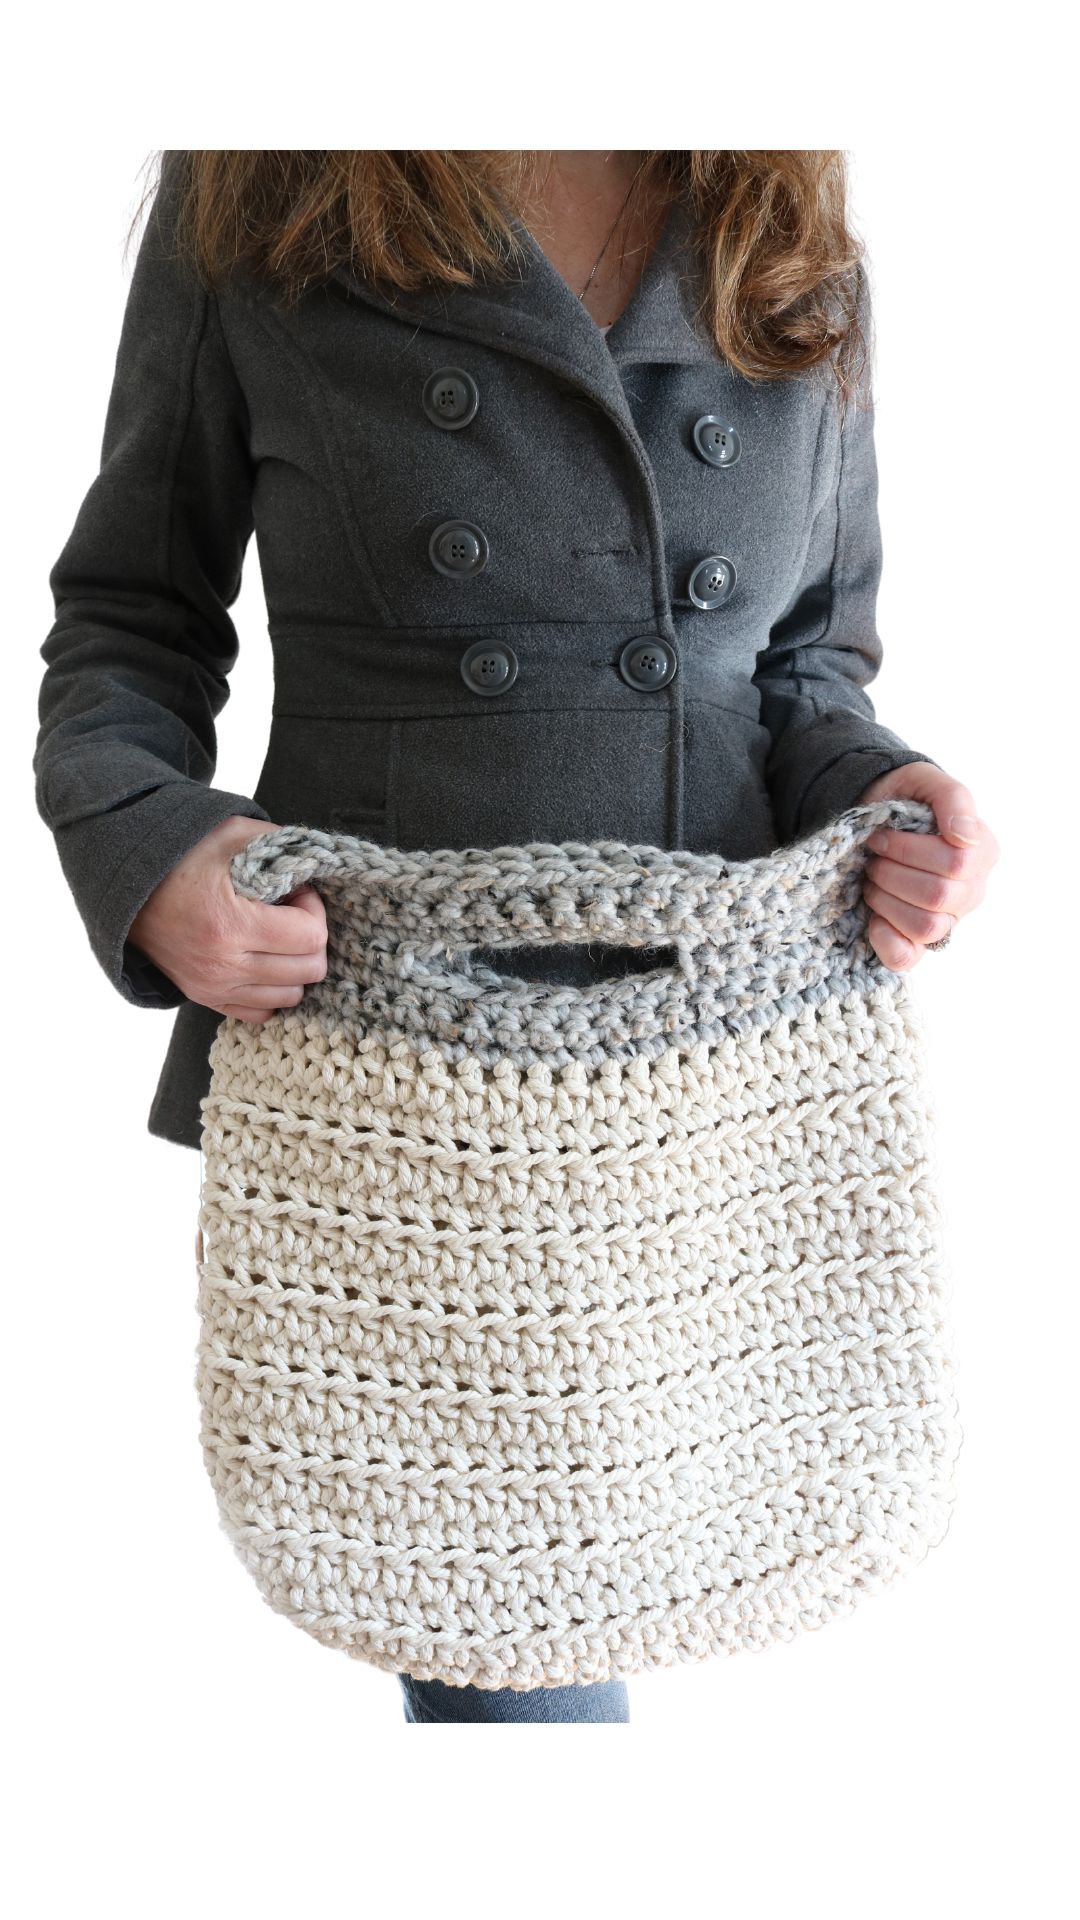 Brighton Crochet Bag holding sides